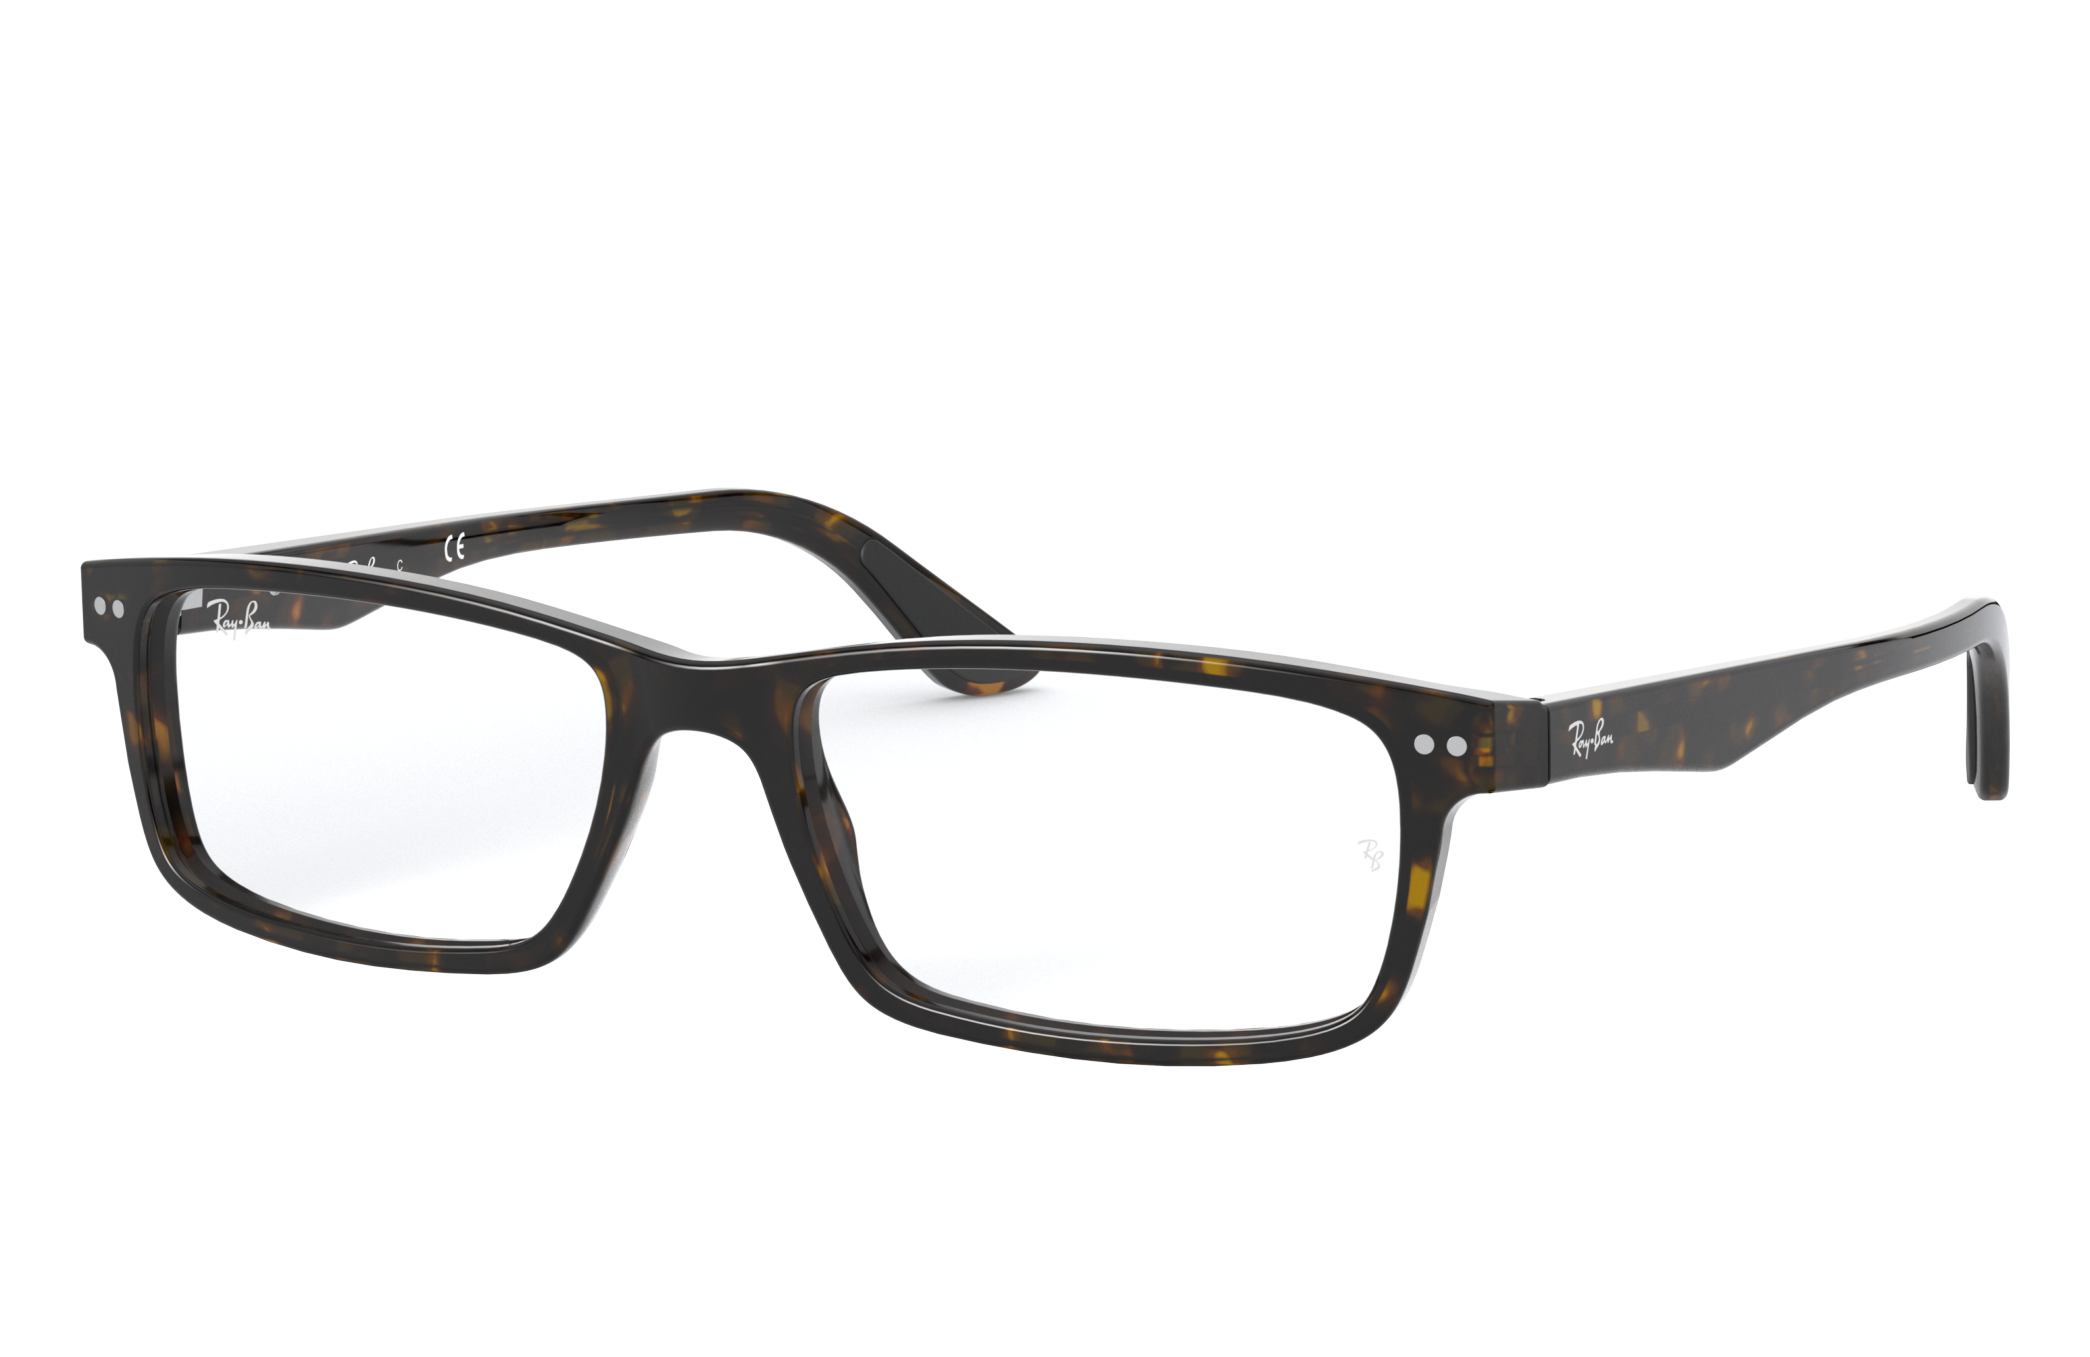 Rb5277 Optics Eyeglasses with Dark Havana Frame | Ray-Ban®